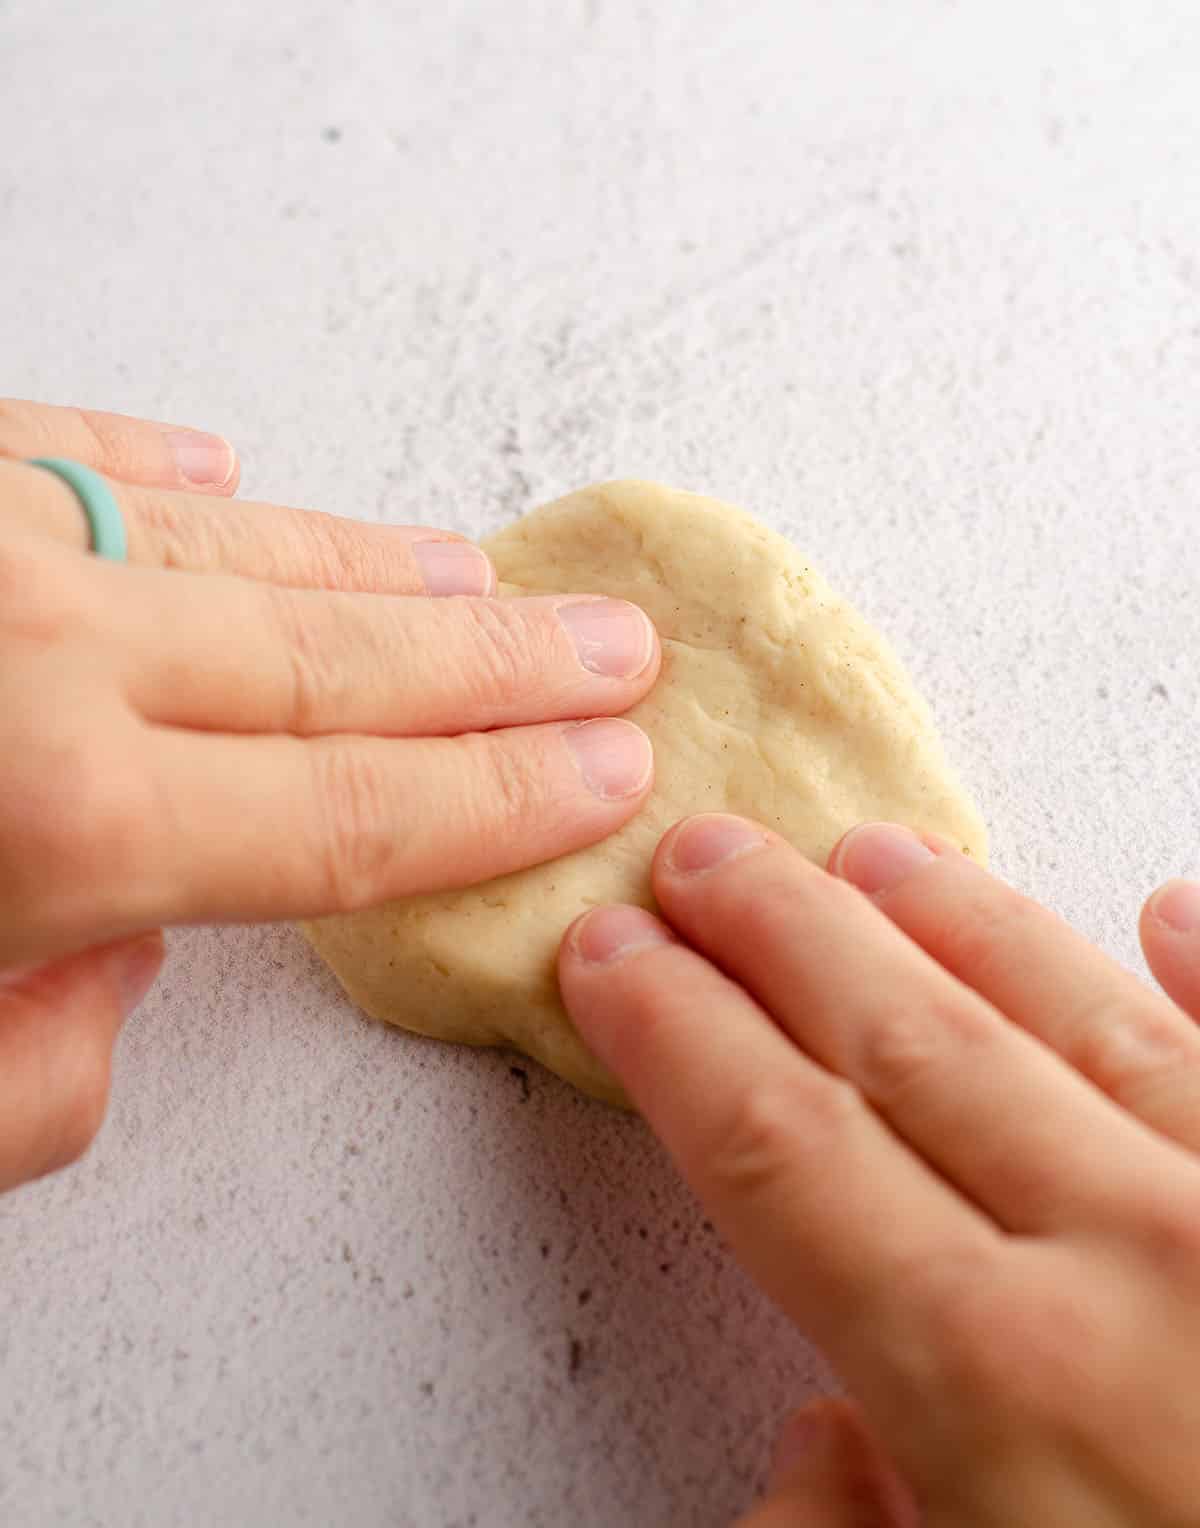 hands forming bread dough into a disc